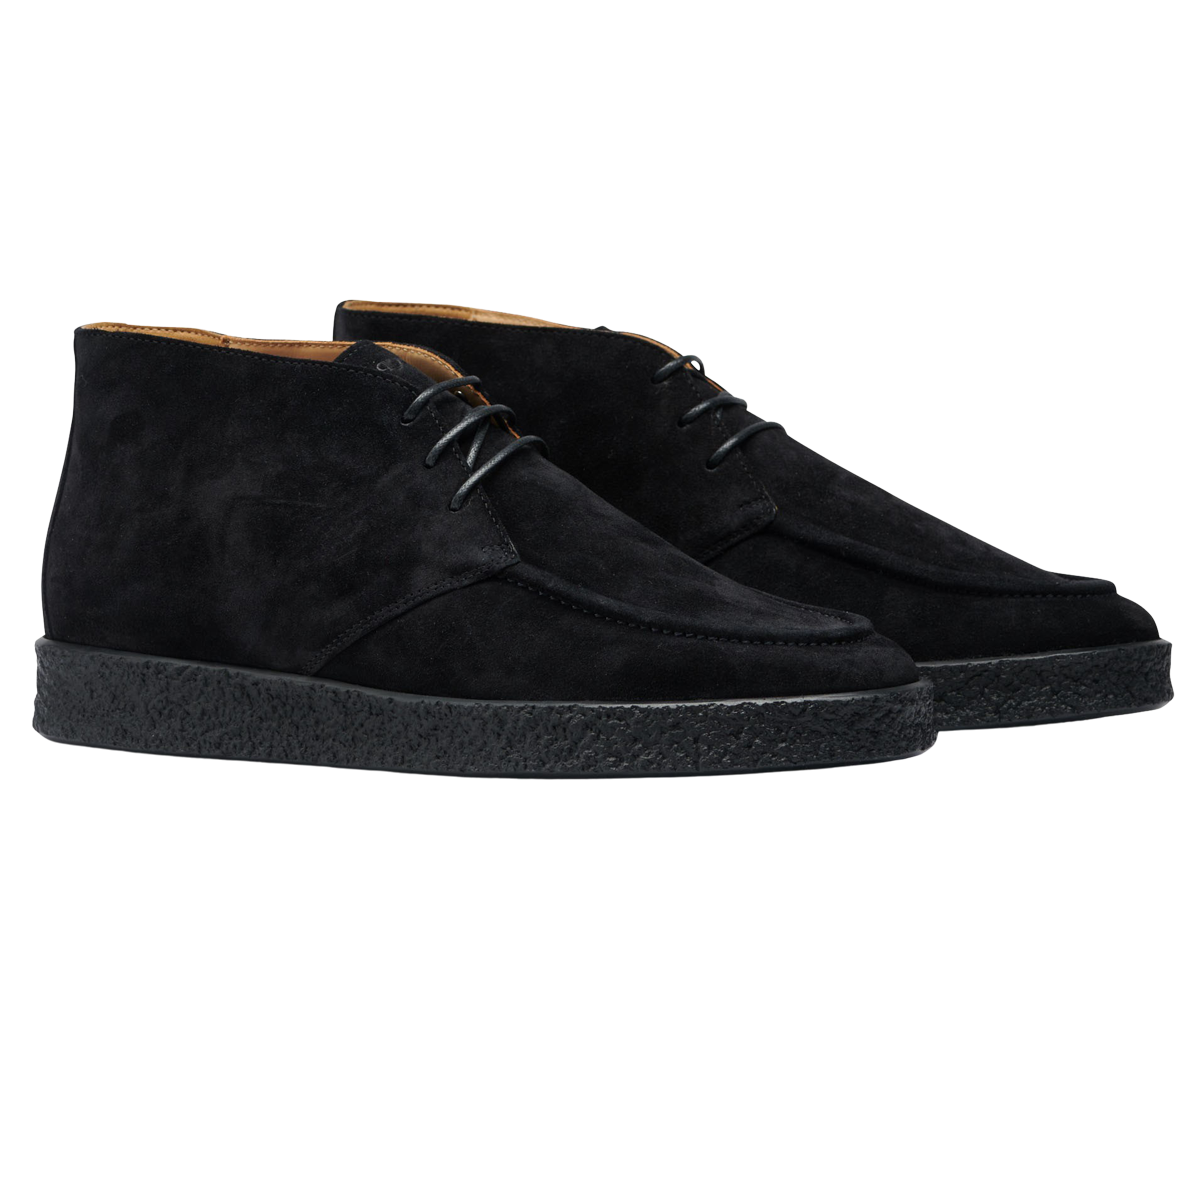 CQP Black Suede Leather Plana Boots Feature